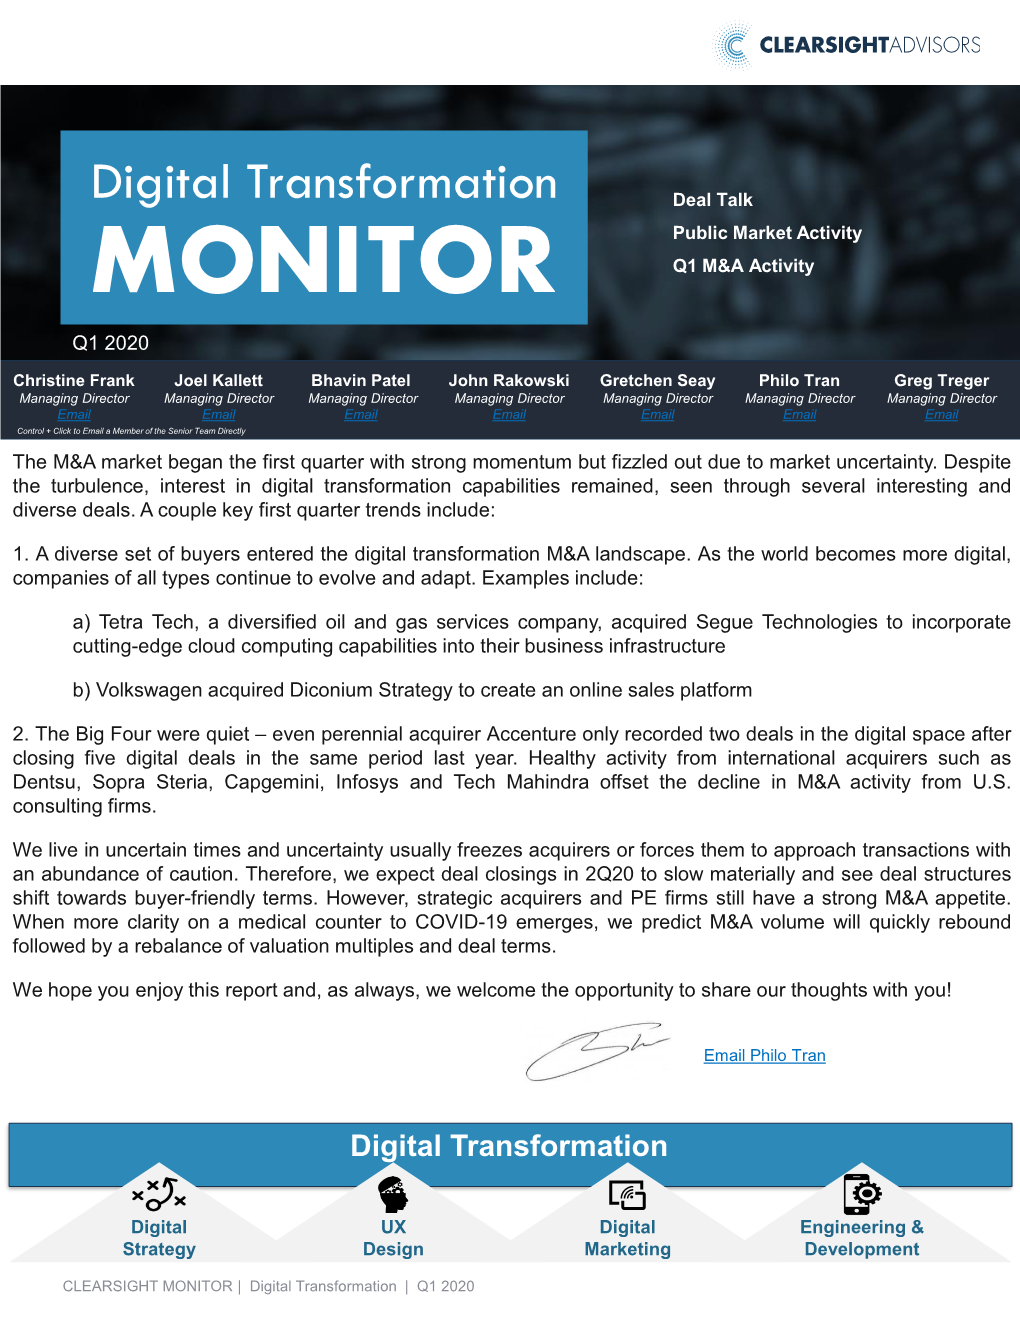 Digital Transformation Deal Talk Public Market Activity Q1 M&A Activity